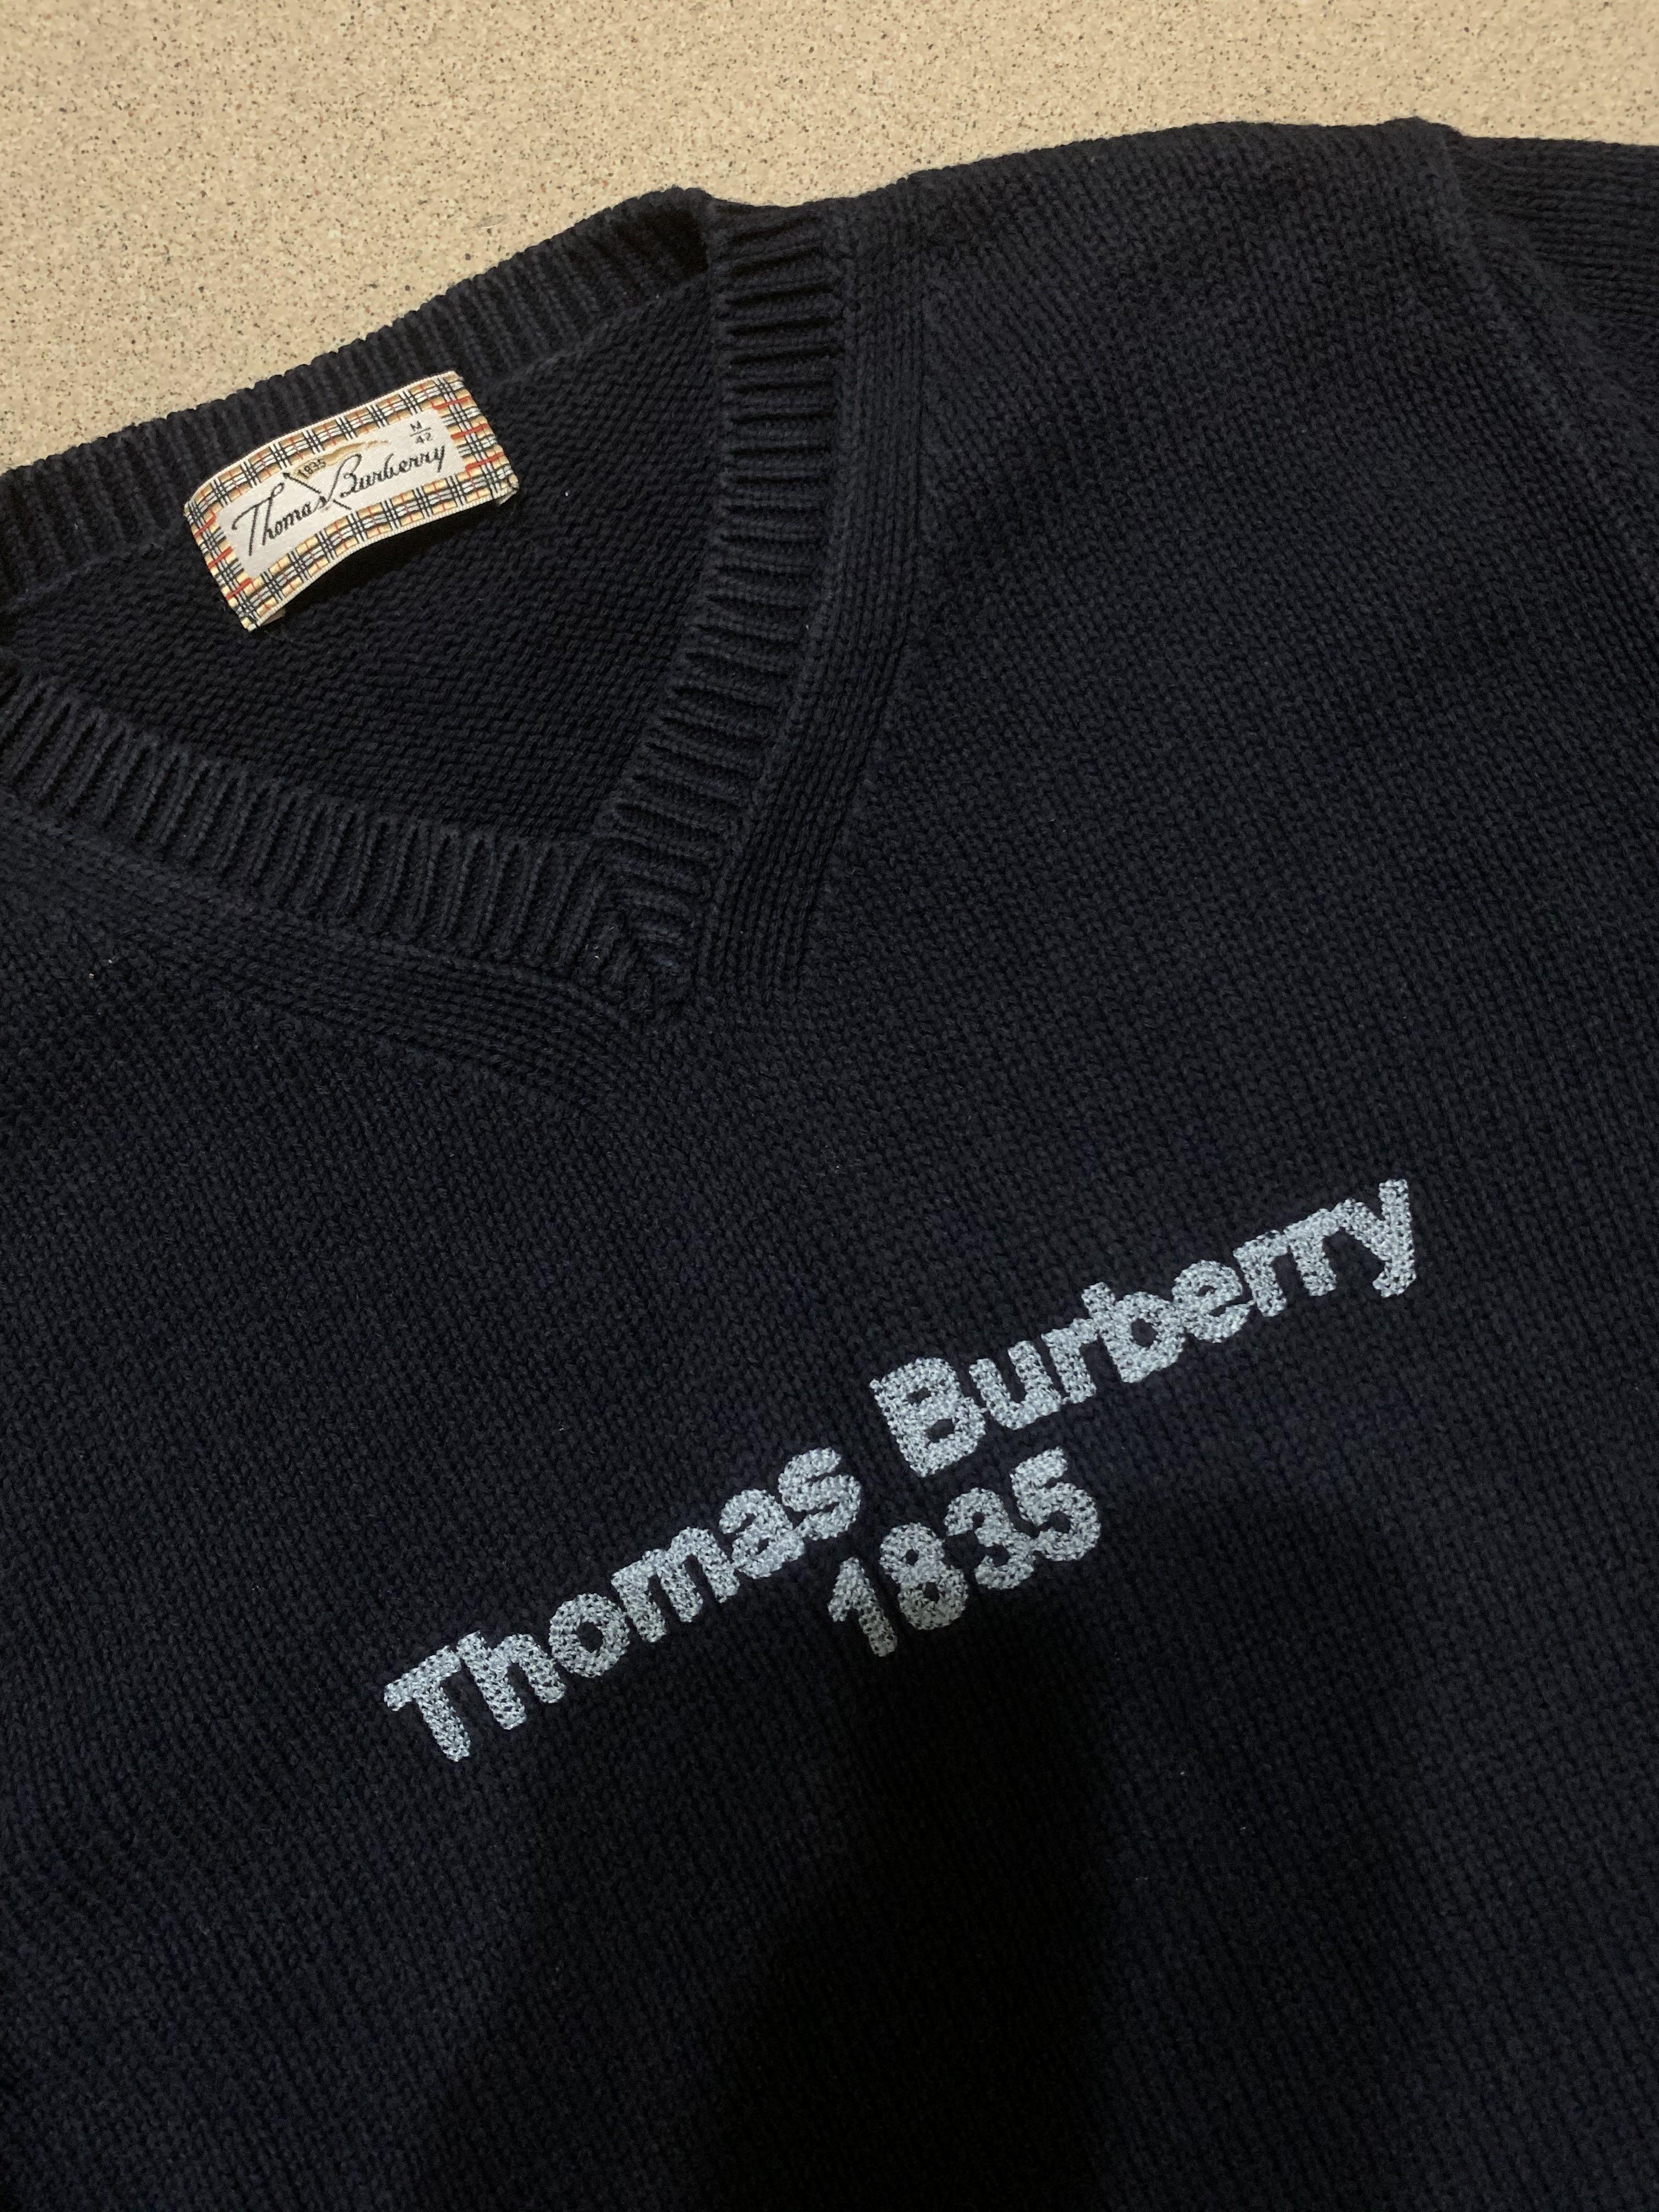 thomas burberry 1835